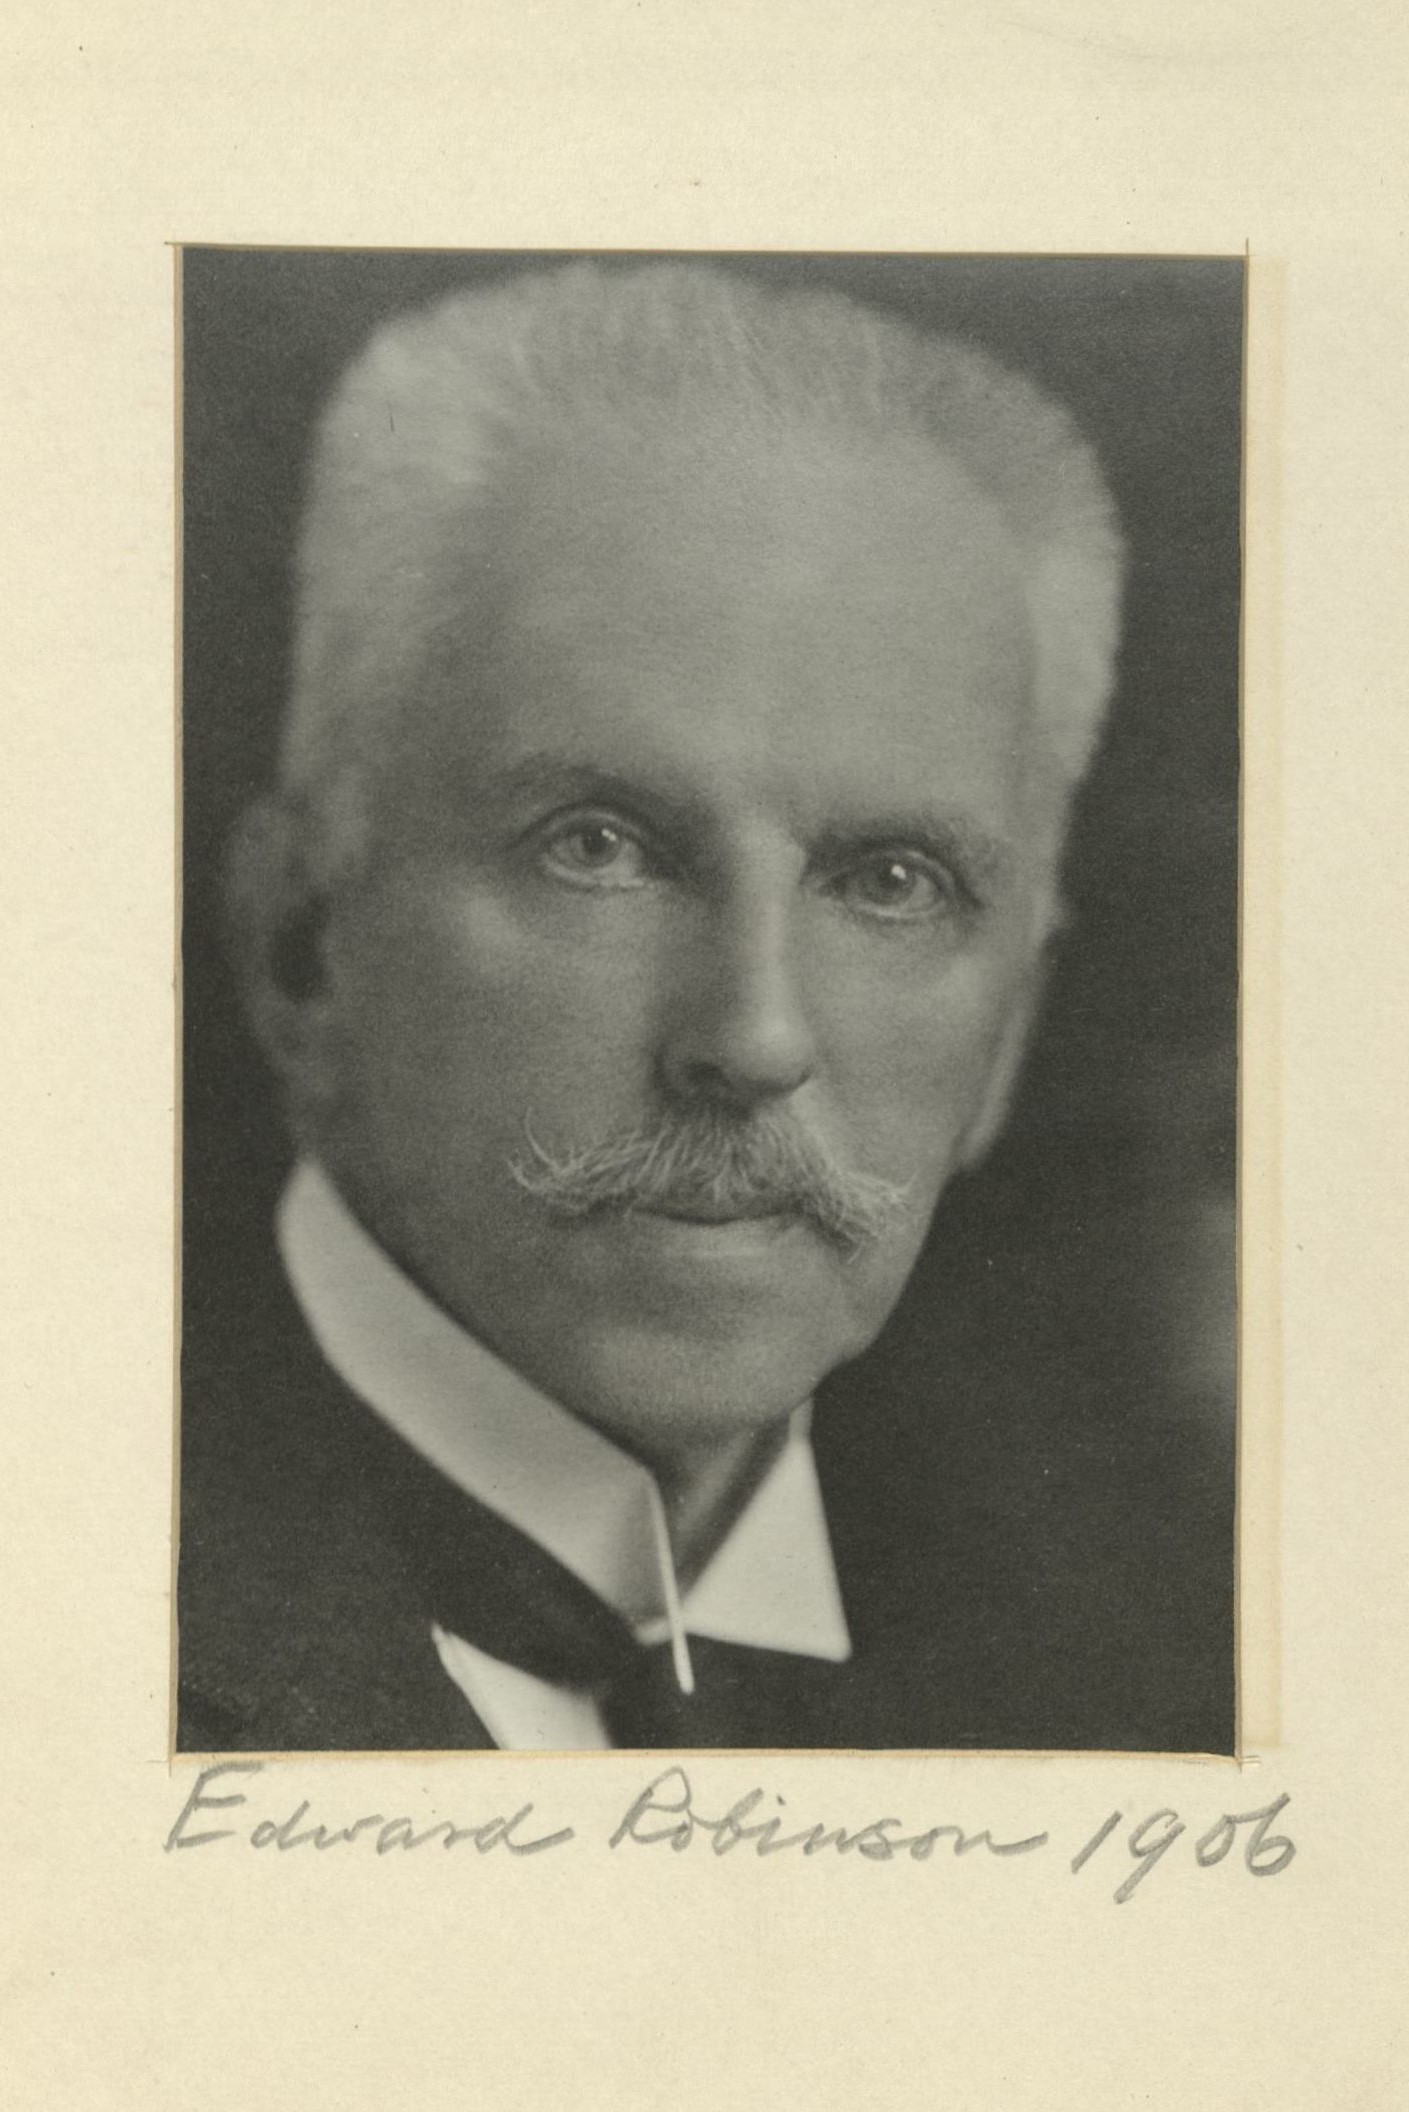 Member portrait of Edward Robinson